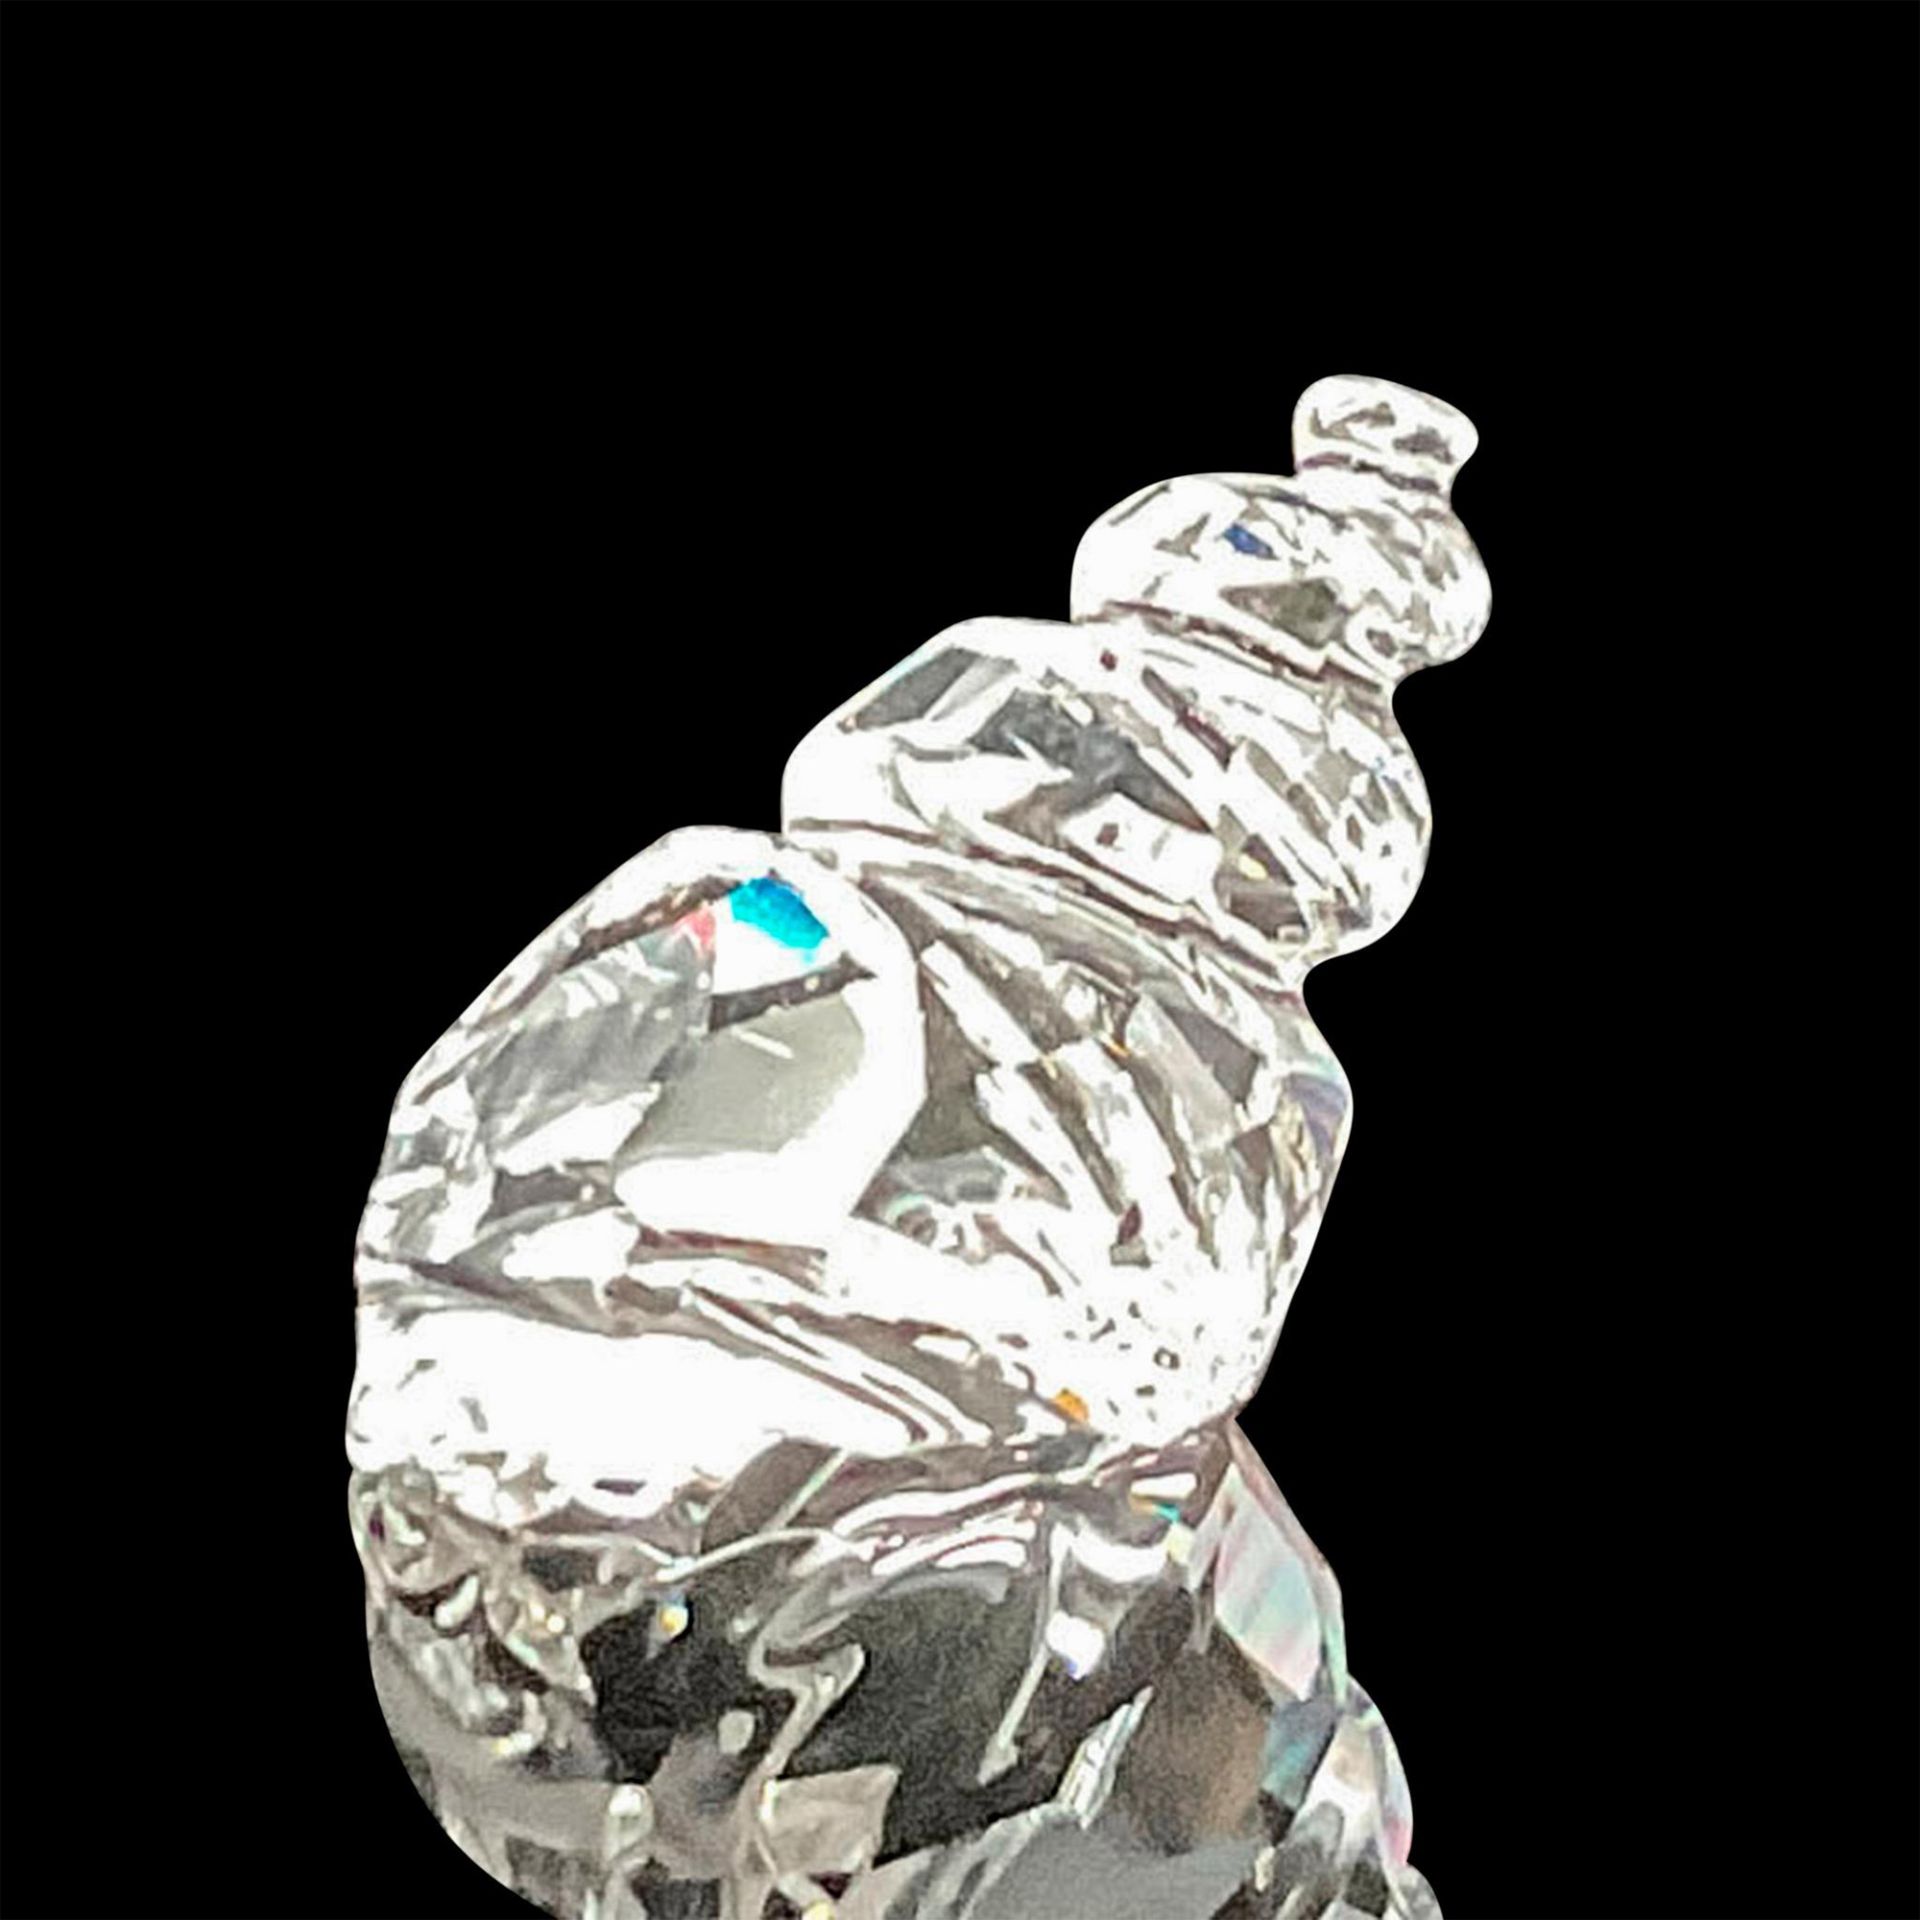 Swarovski Silver Crystal Figurine, Conch - Image 2 of 4